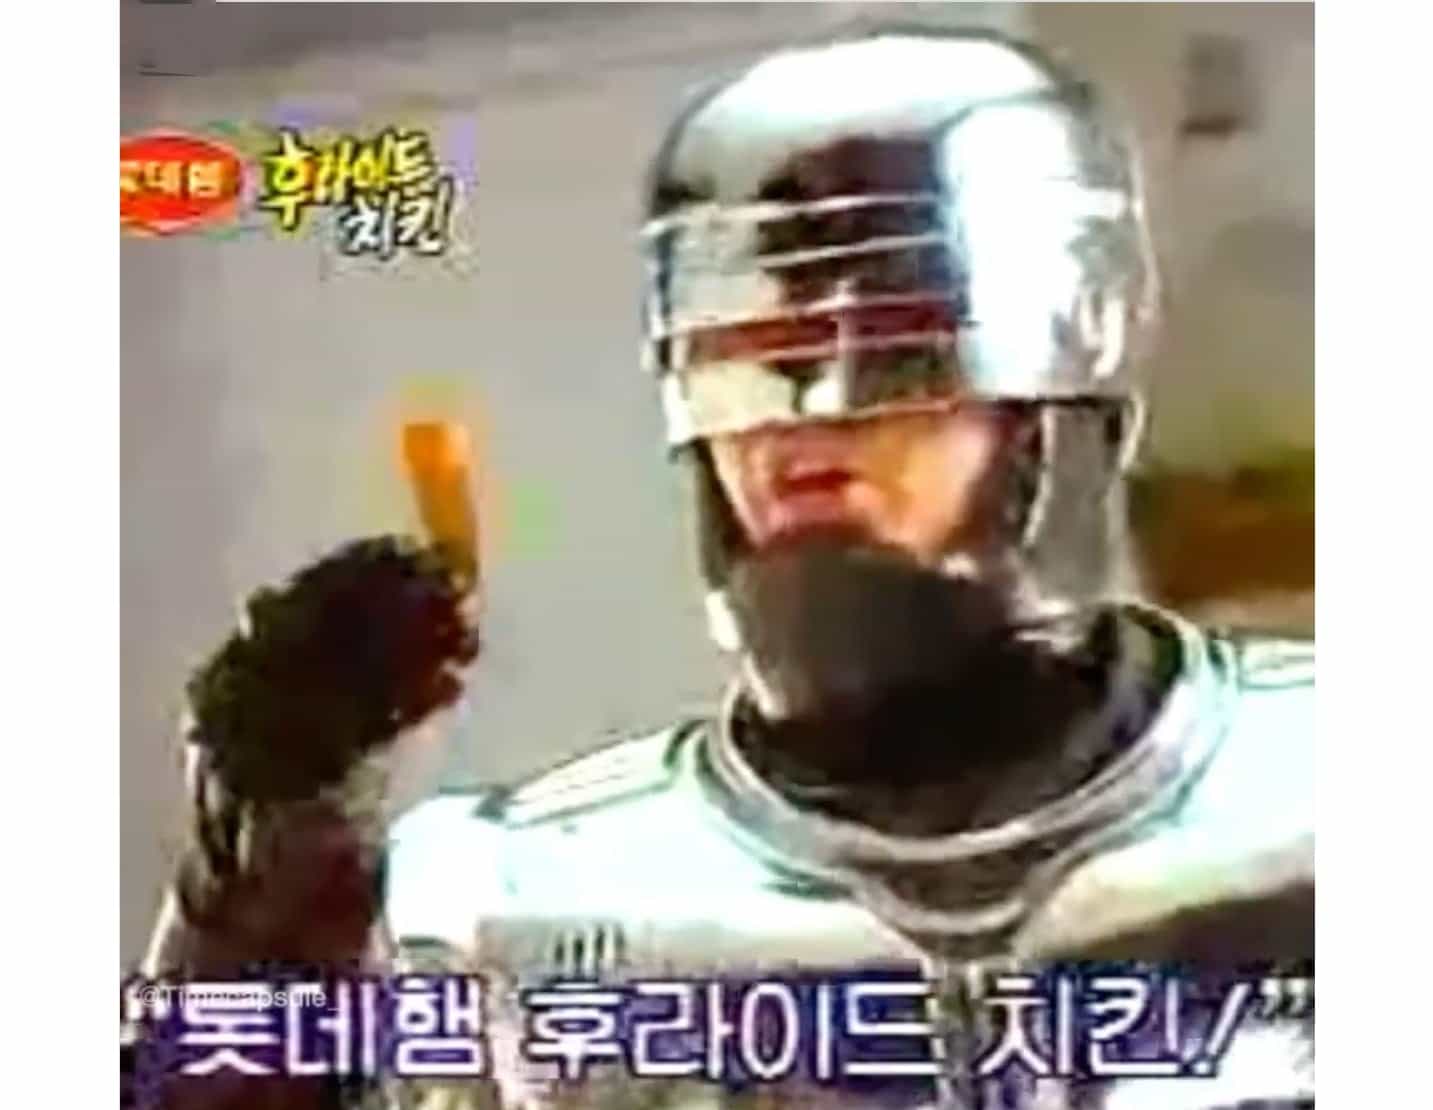 1990 Korean chicken commercial featuring Robocop.